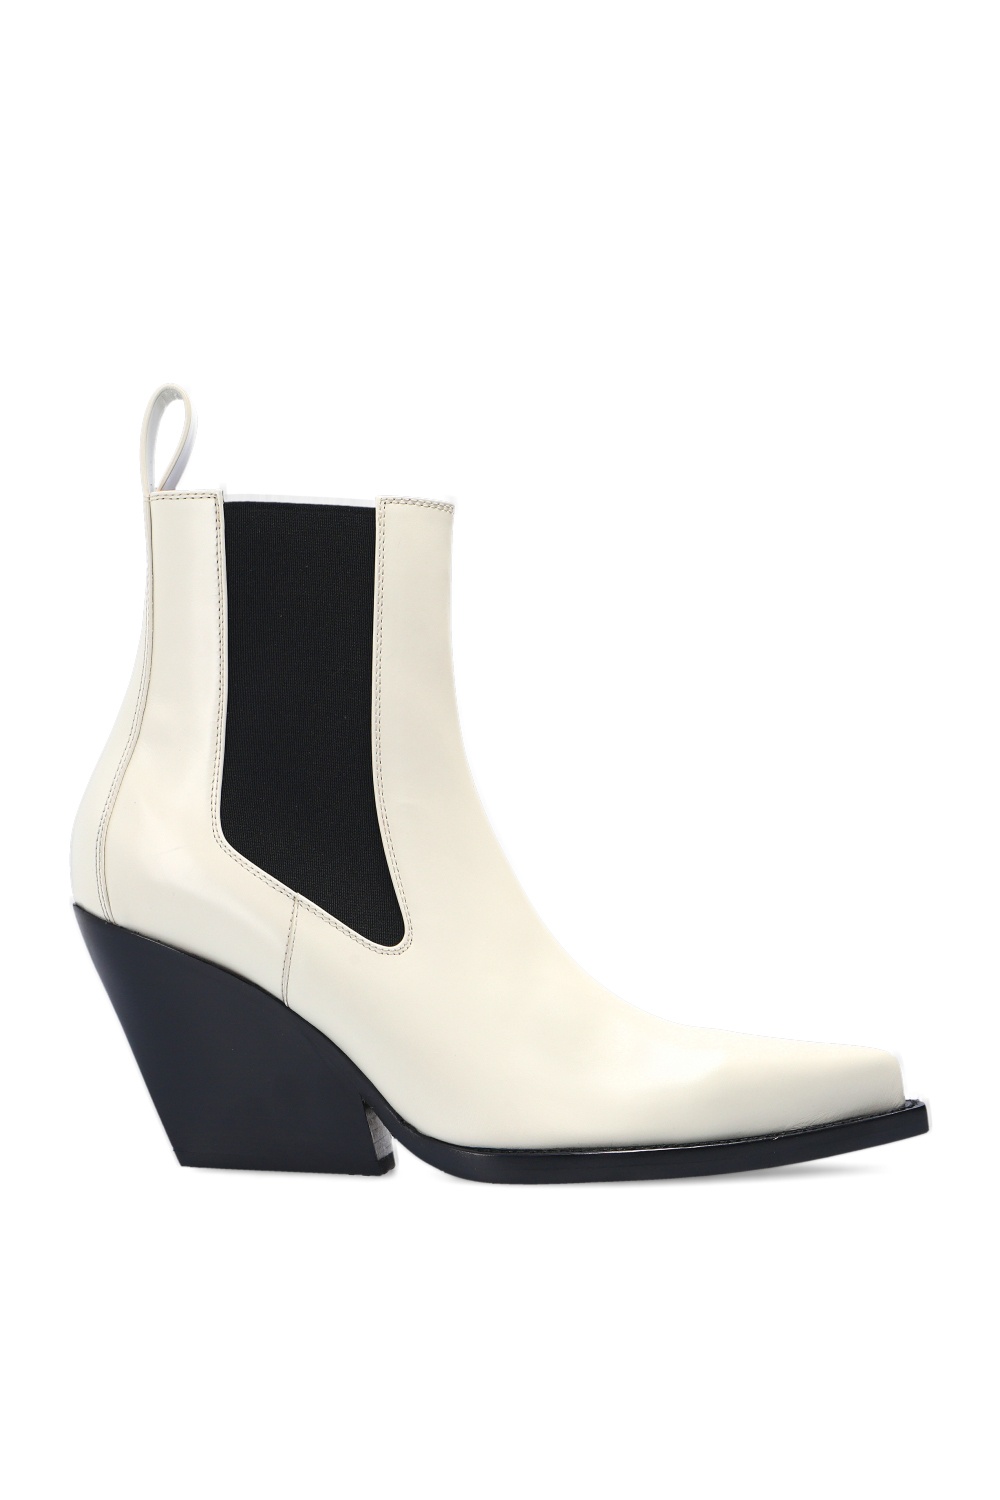 Bottega Veneta ‘BV Lean’ heeled ankle boots